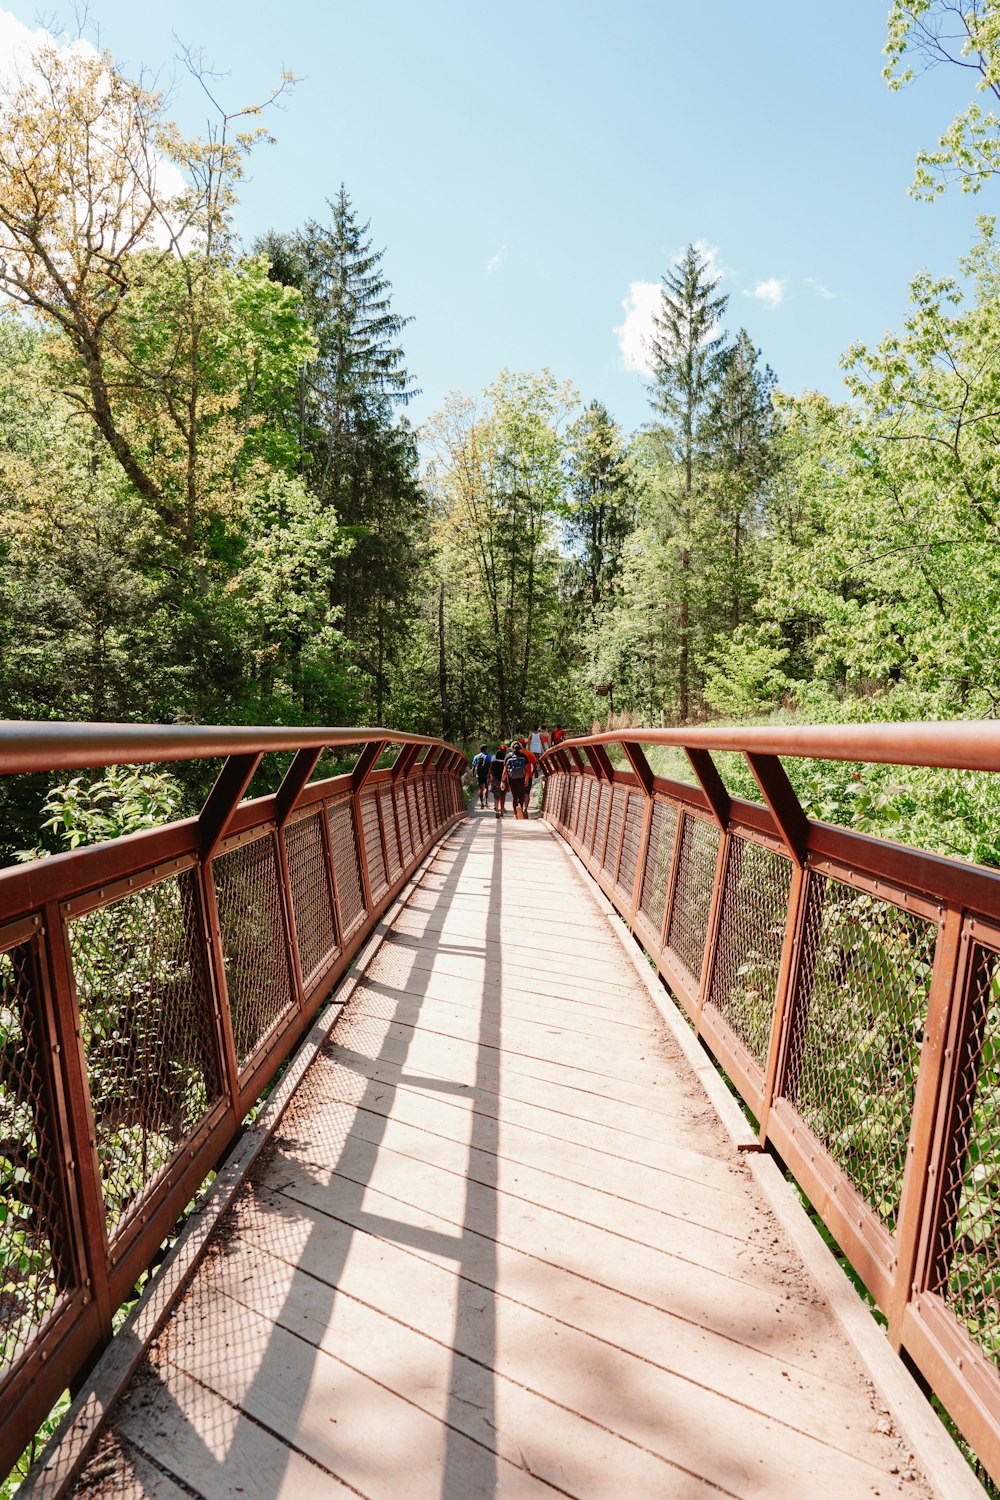 a wooden bridge with people walking on it